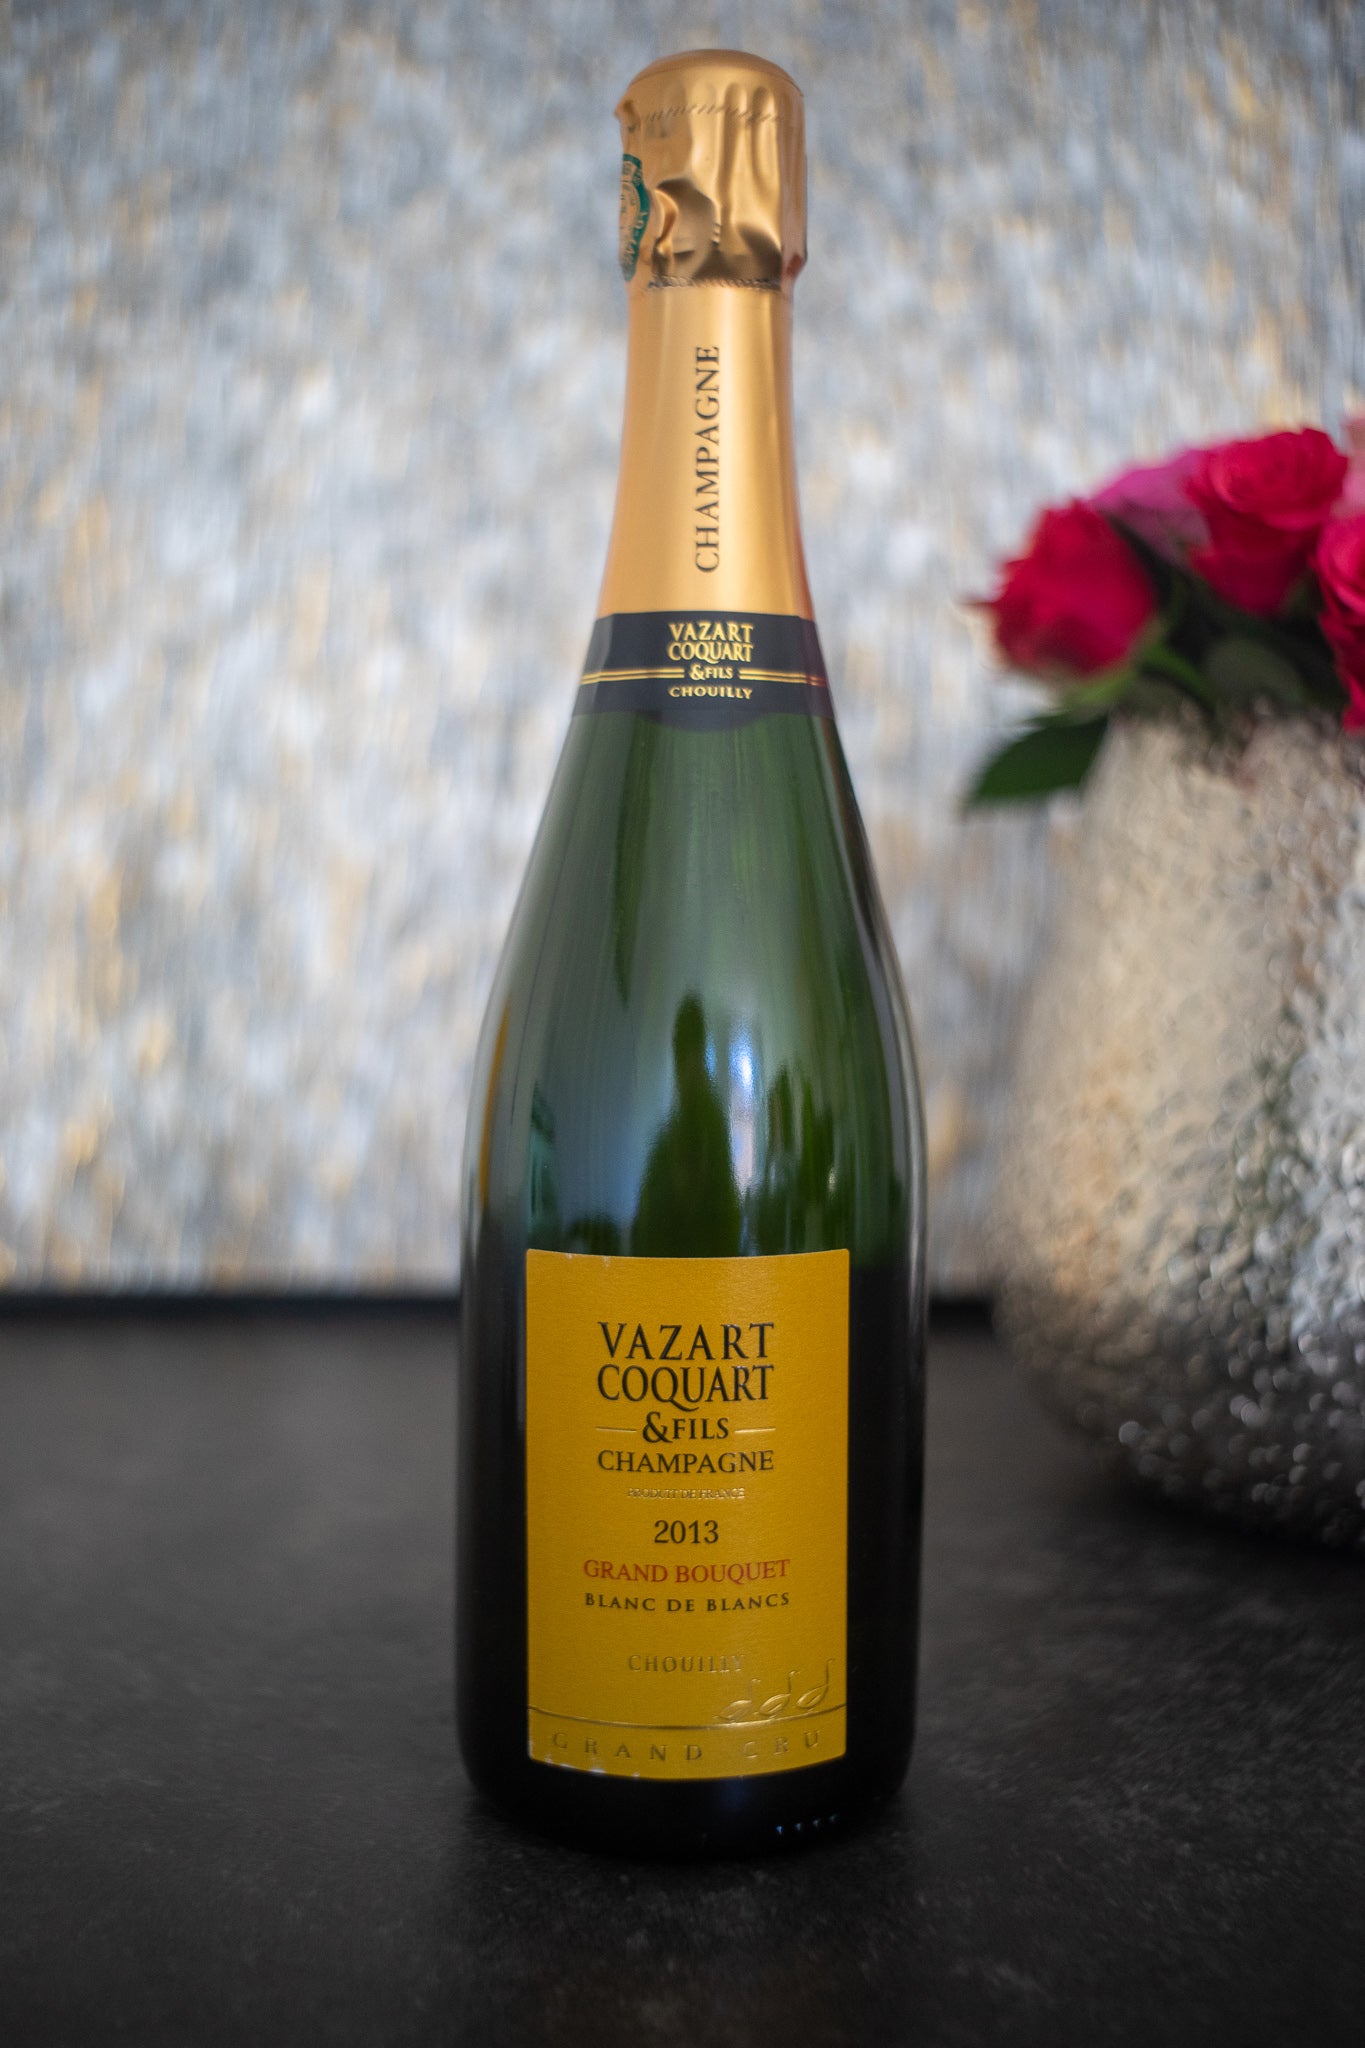 Champagne Vazart-Coquart Chouilly Grand Cru Vintage